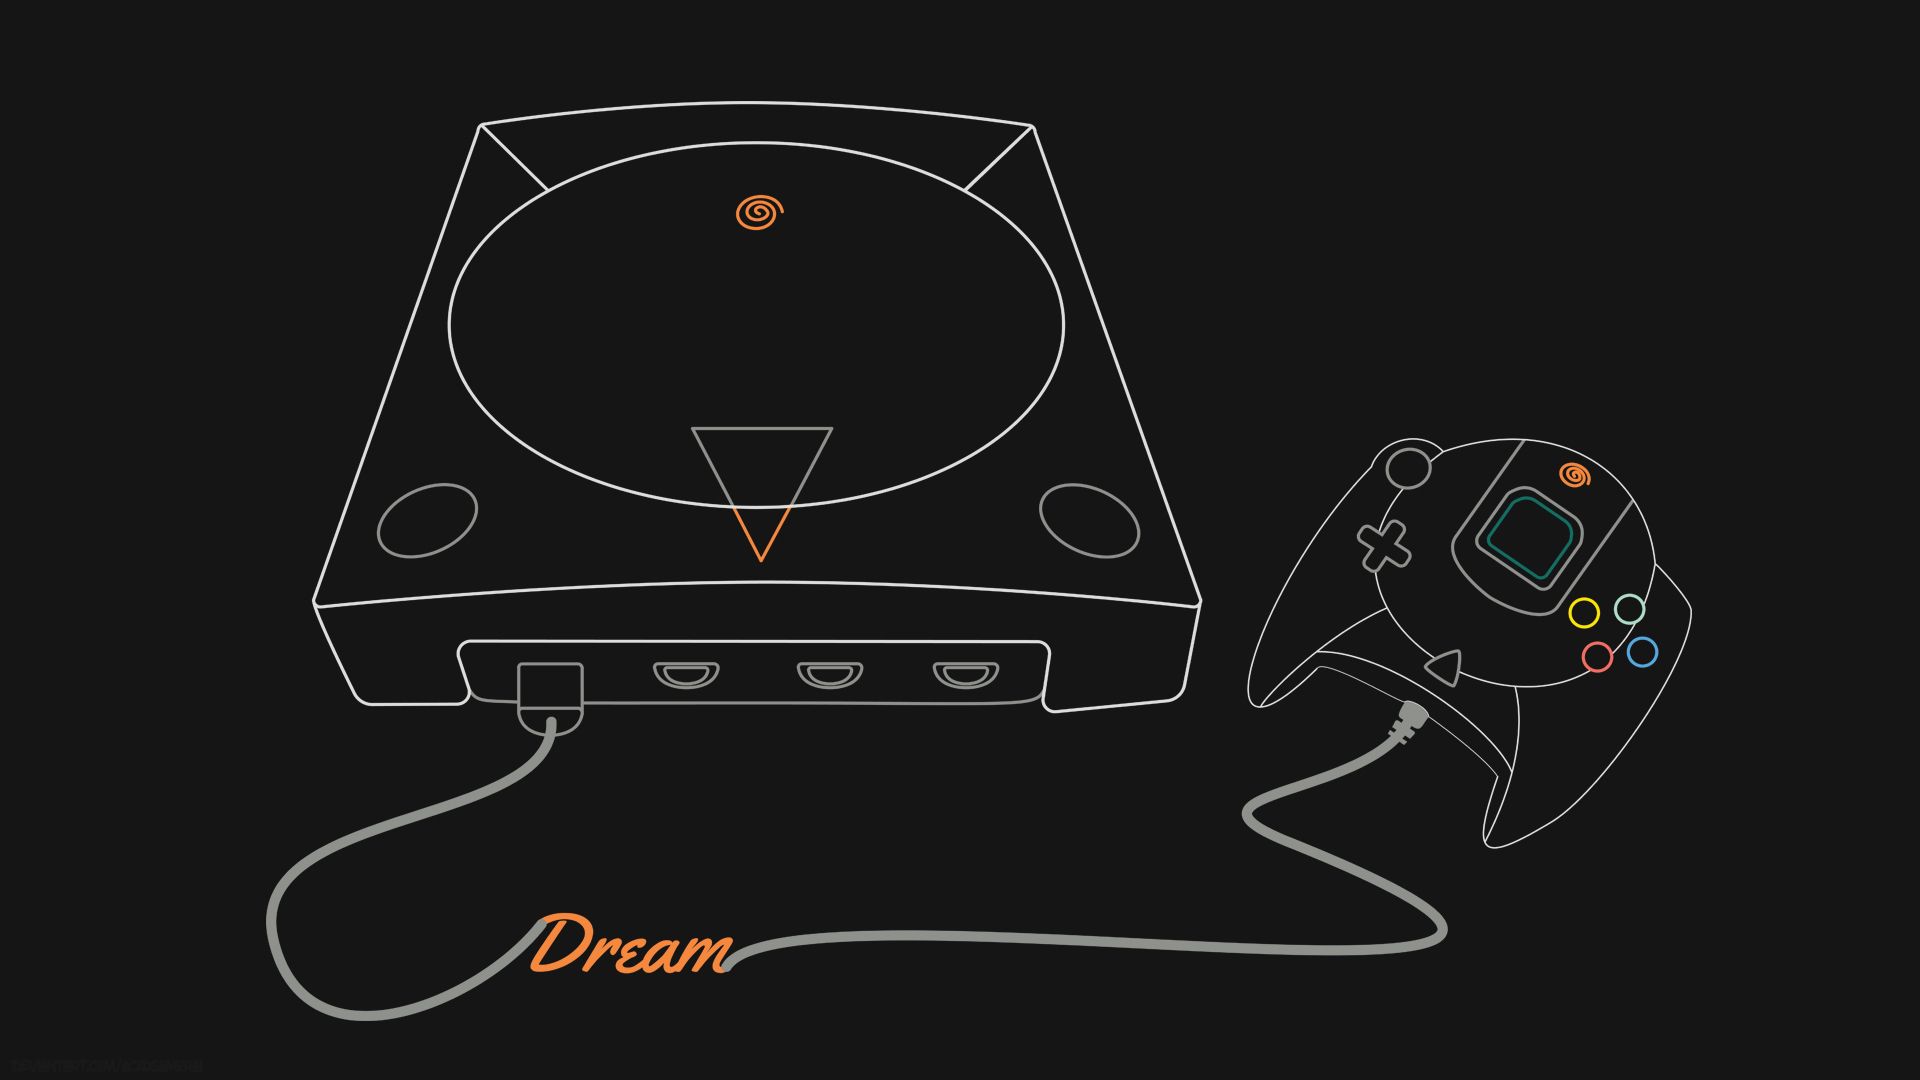 Sega Dreamcast Linework